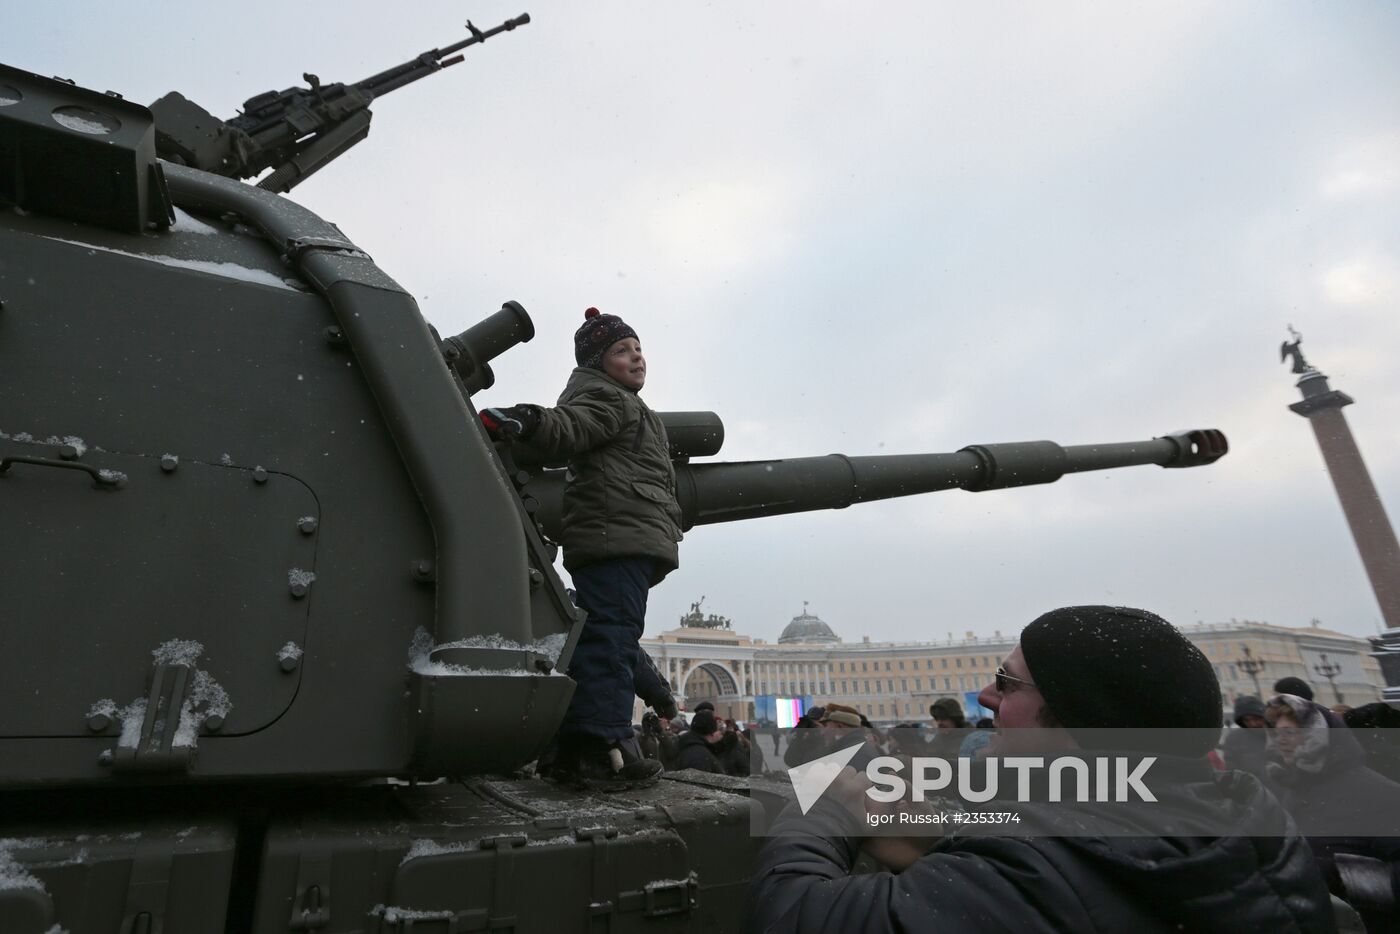 Military equipment displayed on Dvortsovaya Square